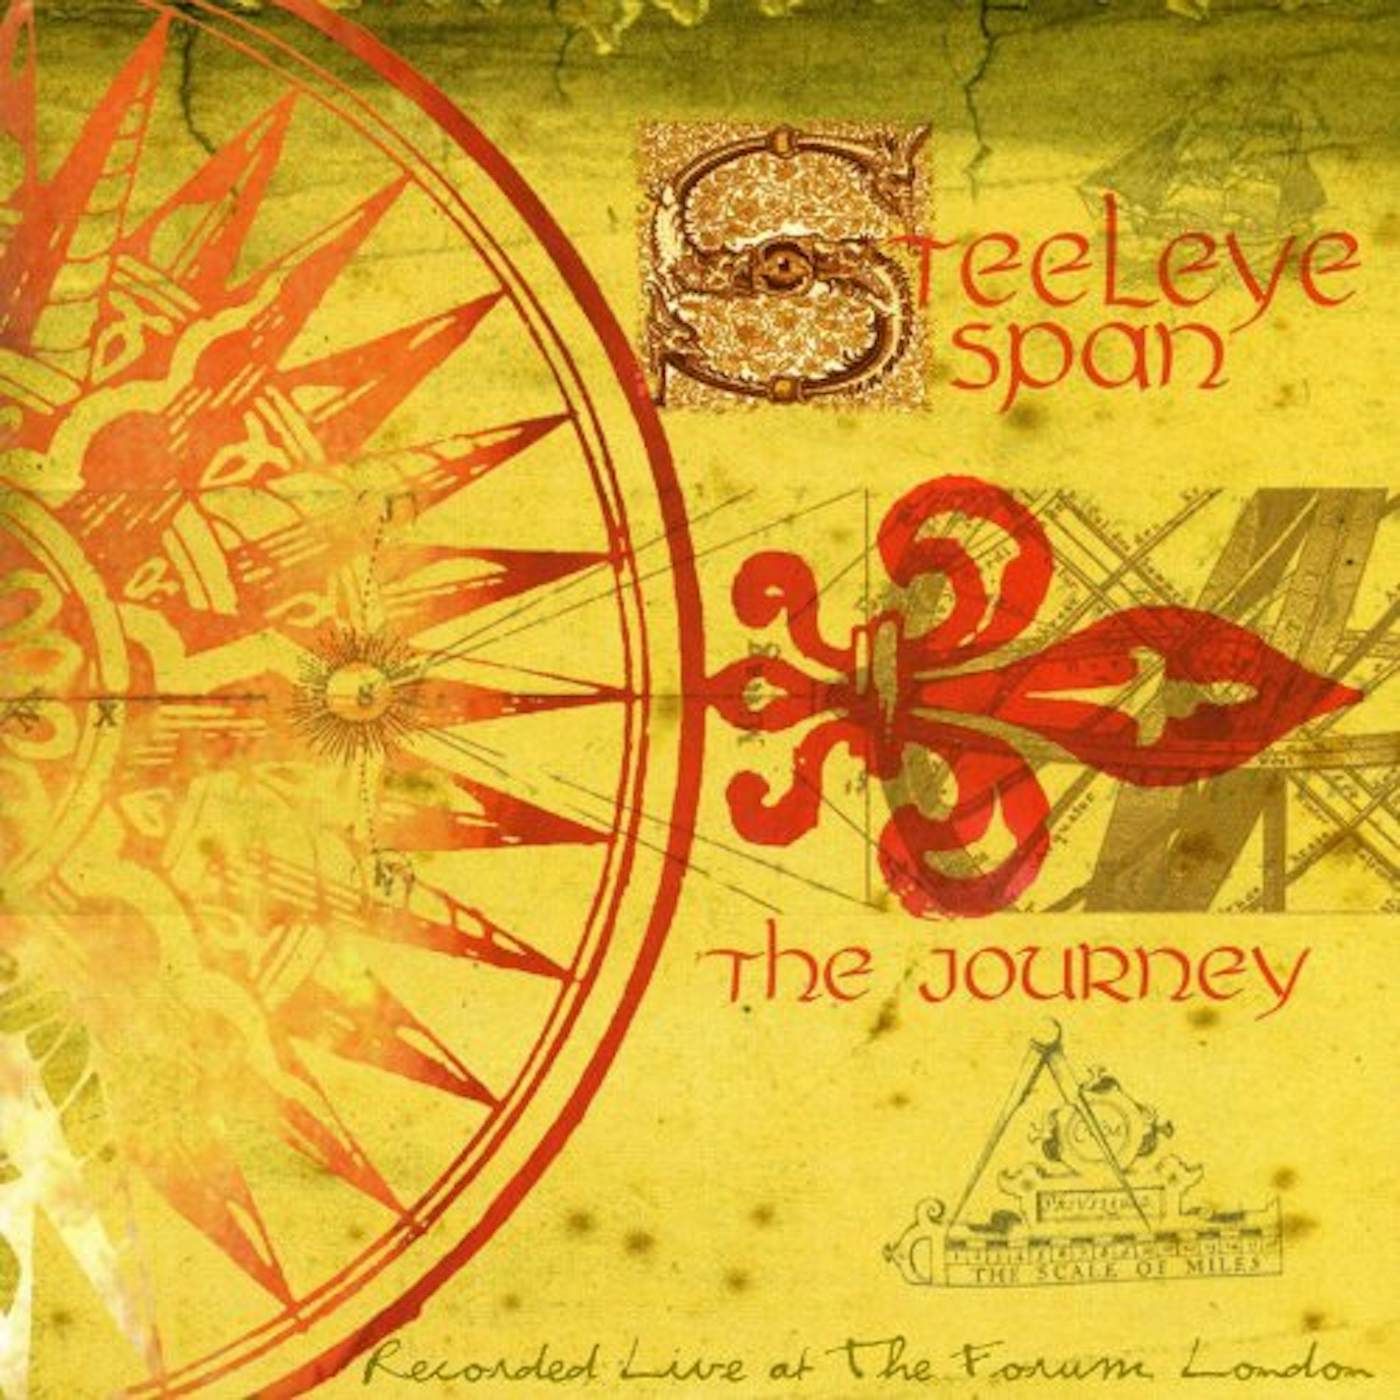 Steeleye Span JOURNEY CD